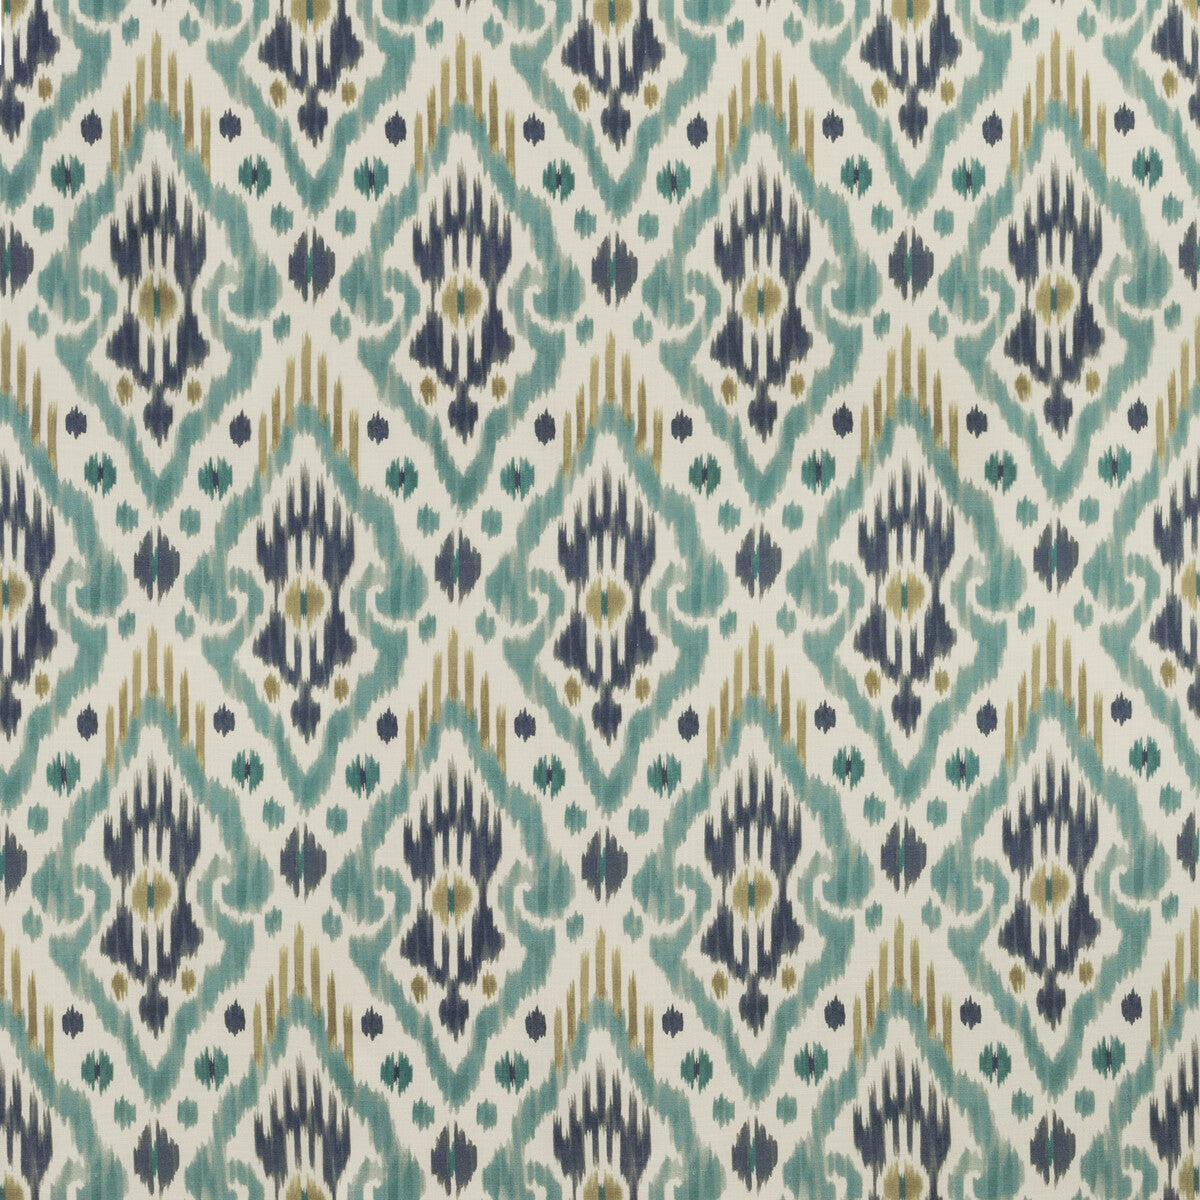 Kravet Basics fabric in conquet-515 color - pattern CONQUET.515.0 - by Kravet Basics